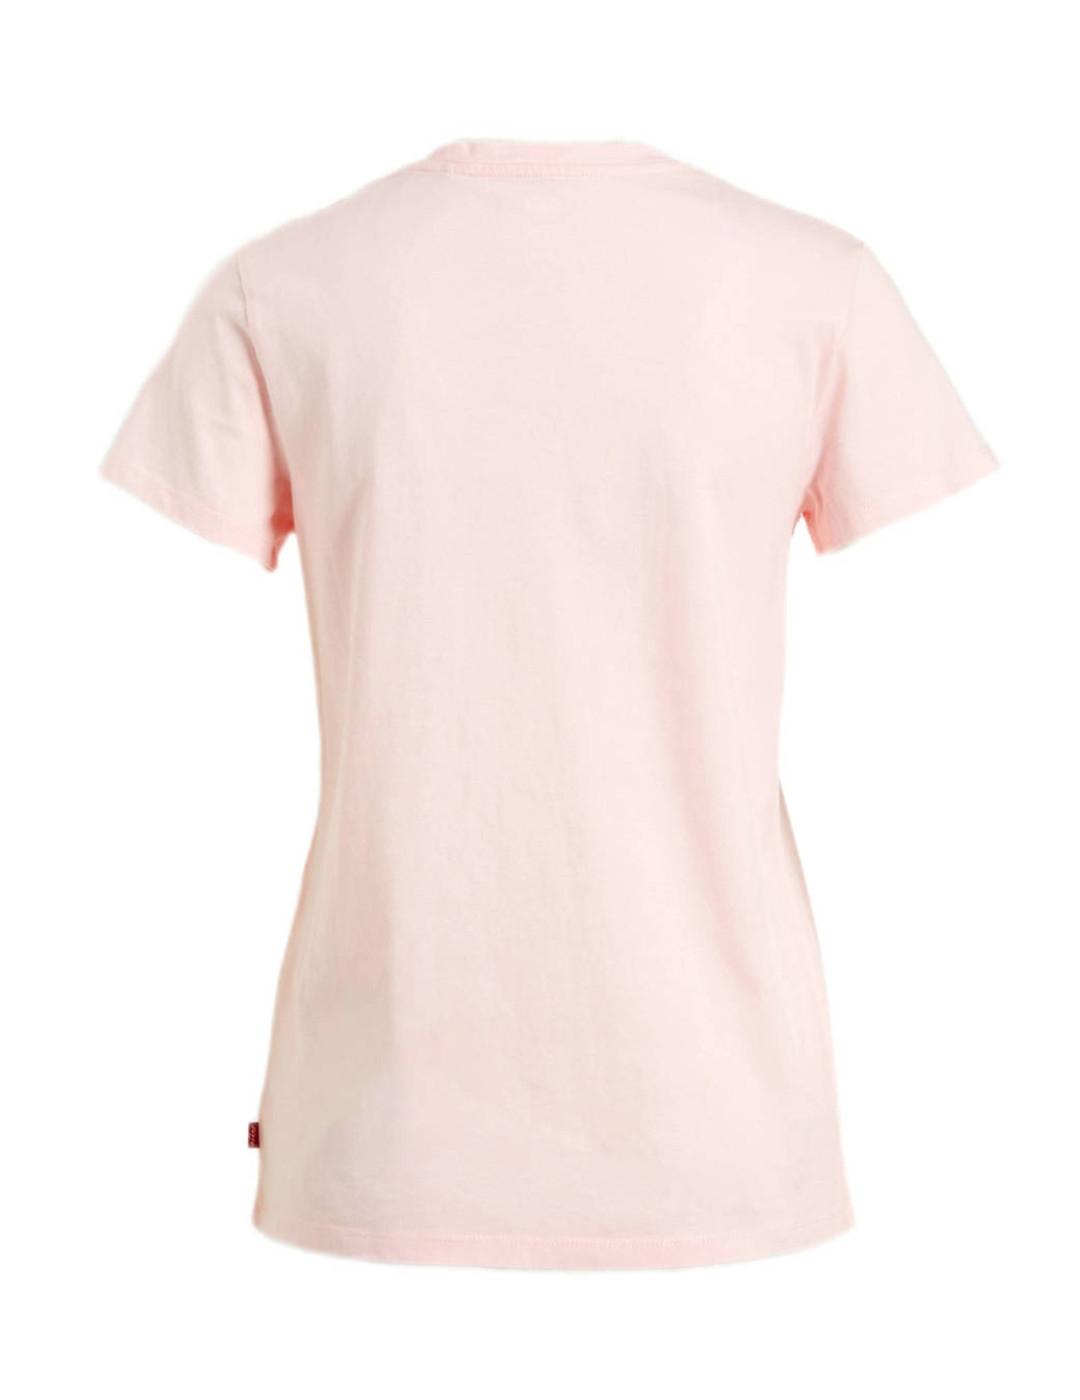 Camiseta Levi´s rosa print floral de mujer-b